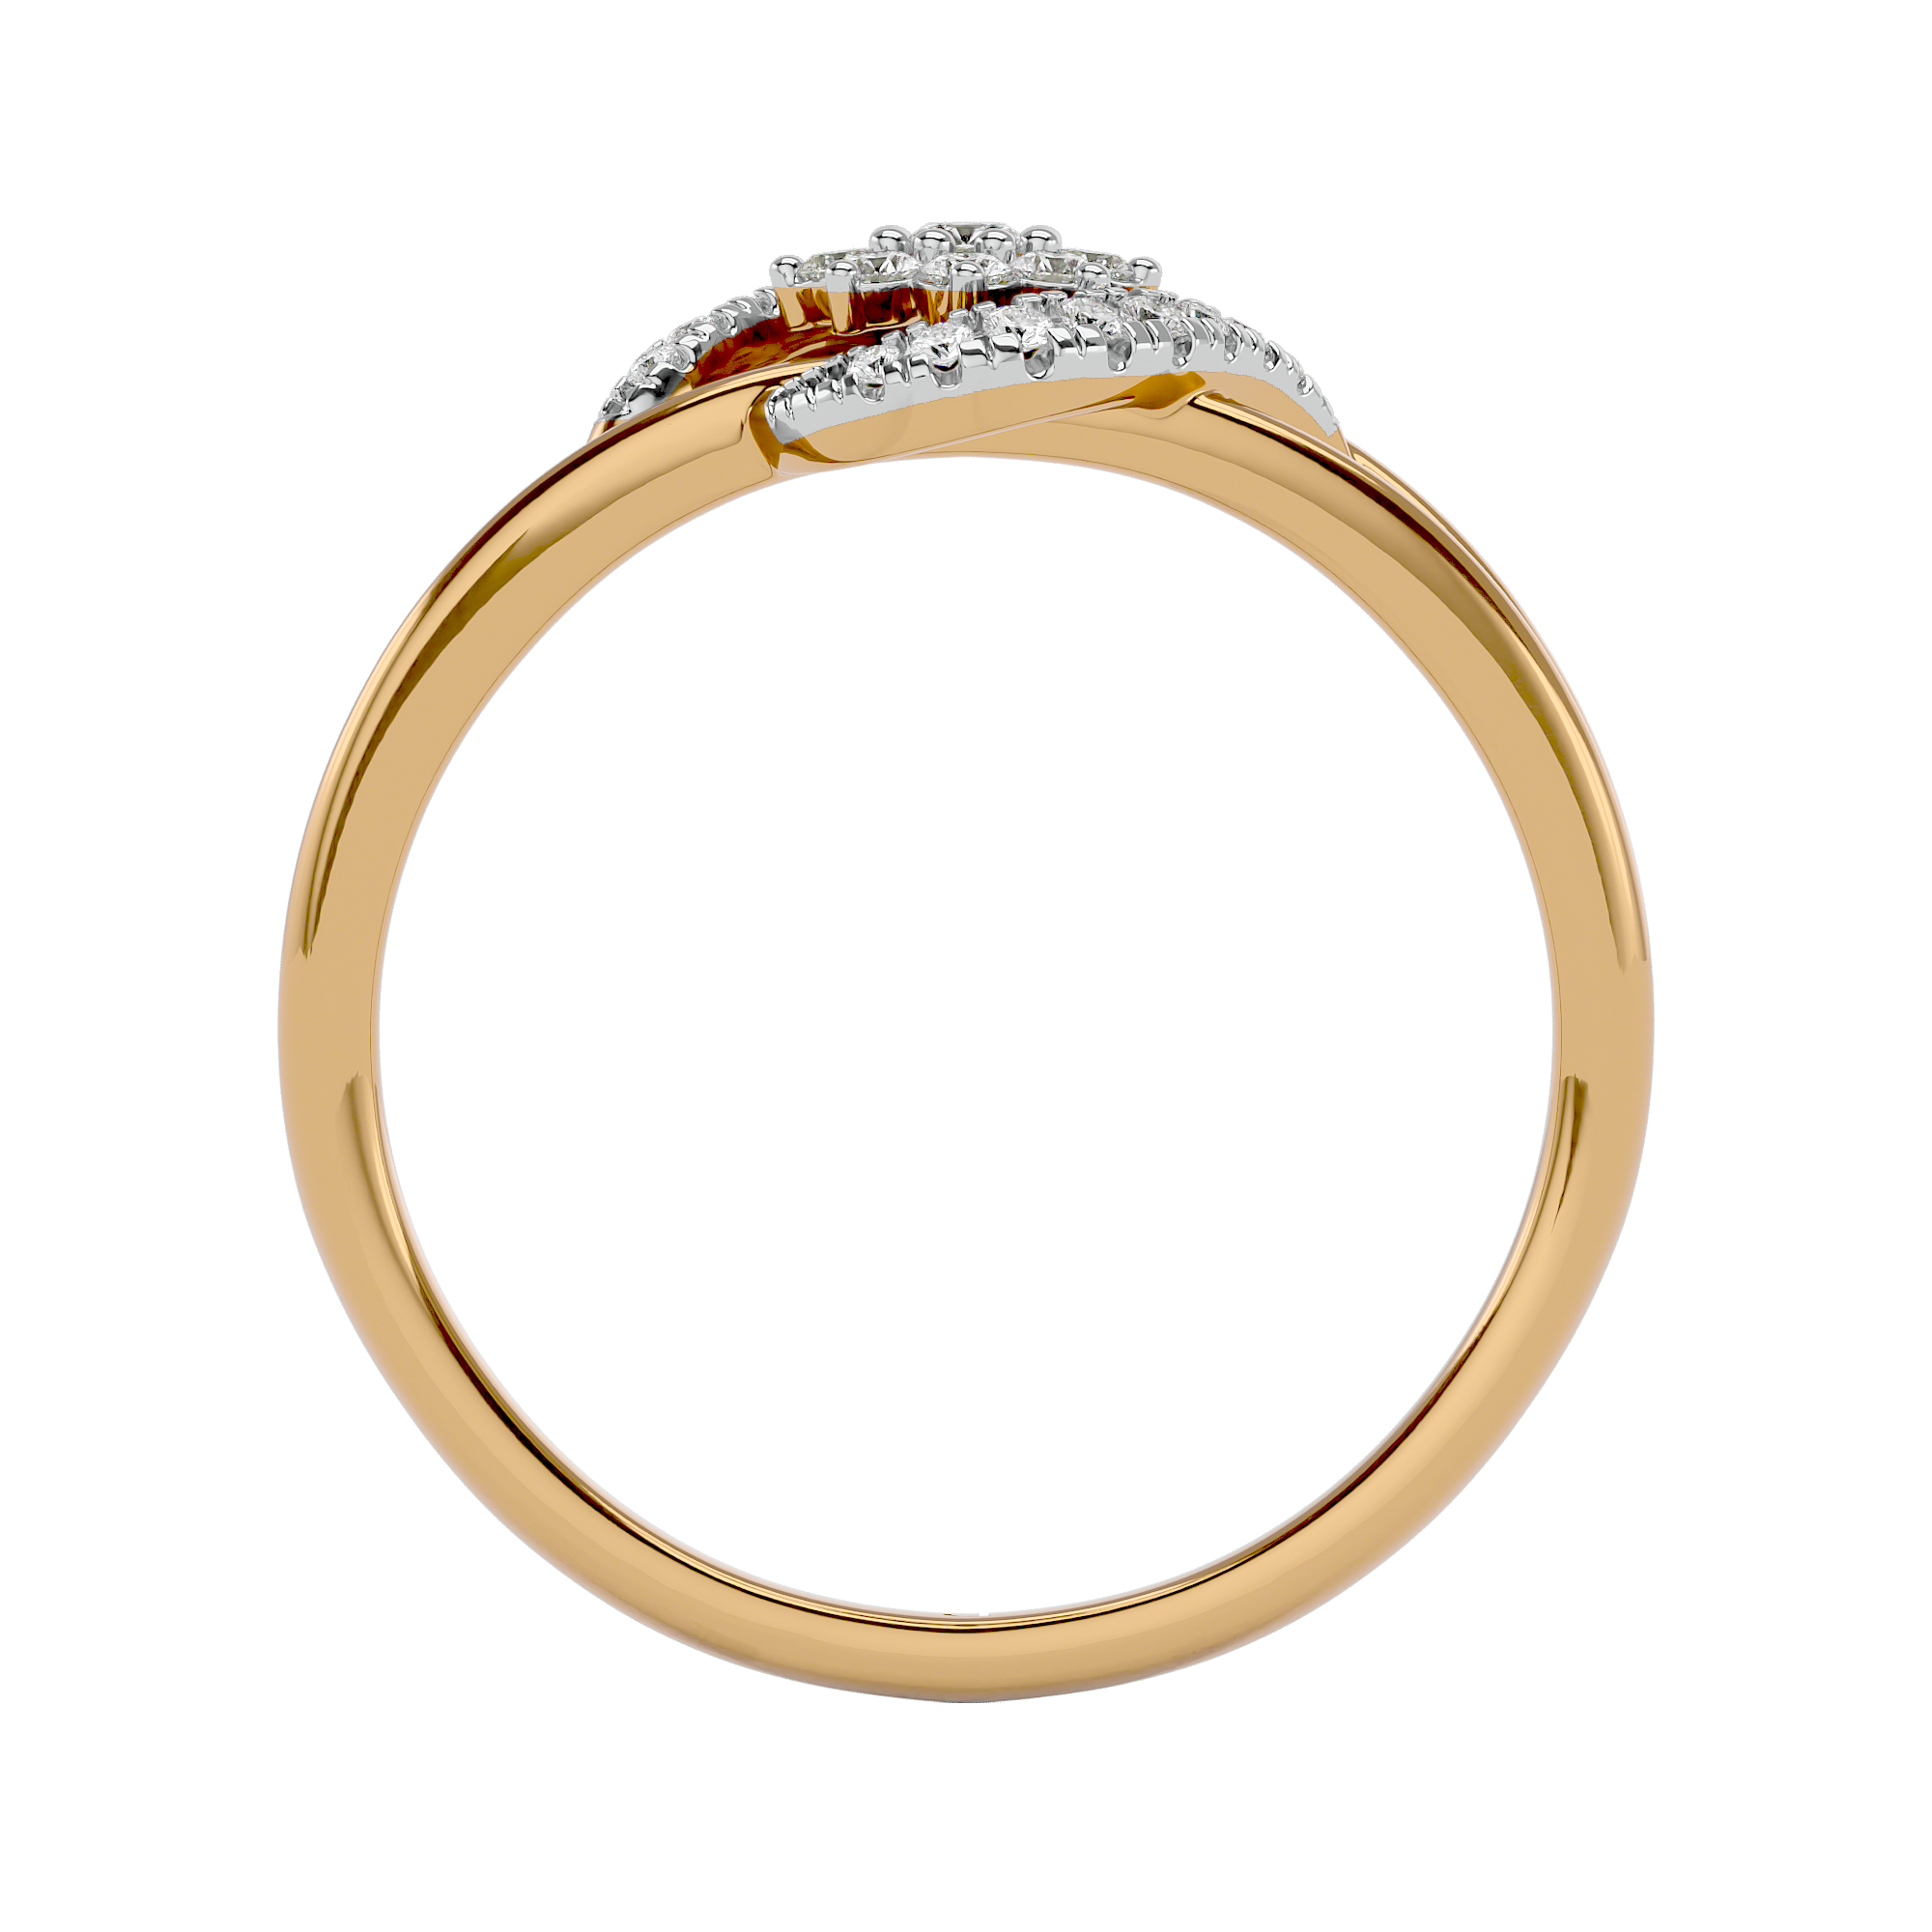 0.17 Carat Diamond Ring in 14kt Yellow Gold For Women - Blu Diamonds